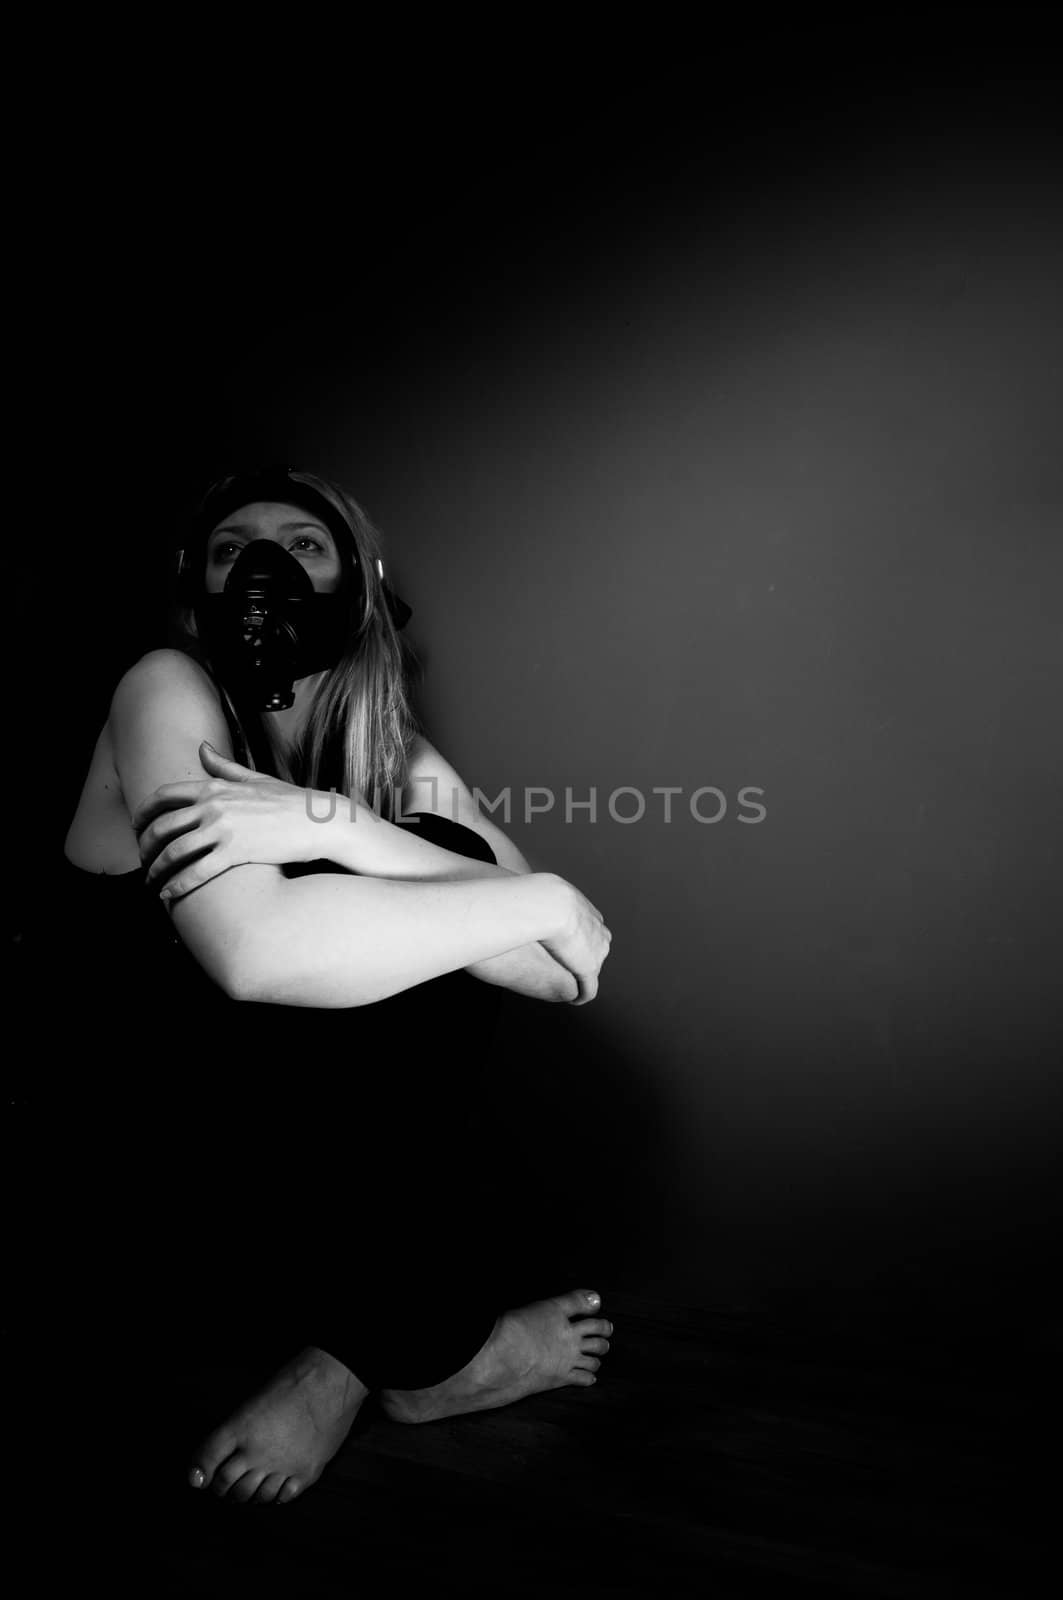 Woman in gasmask against dark background